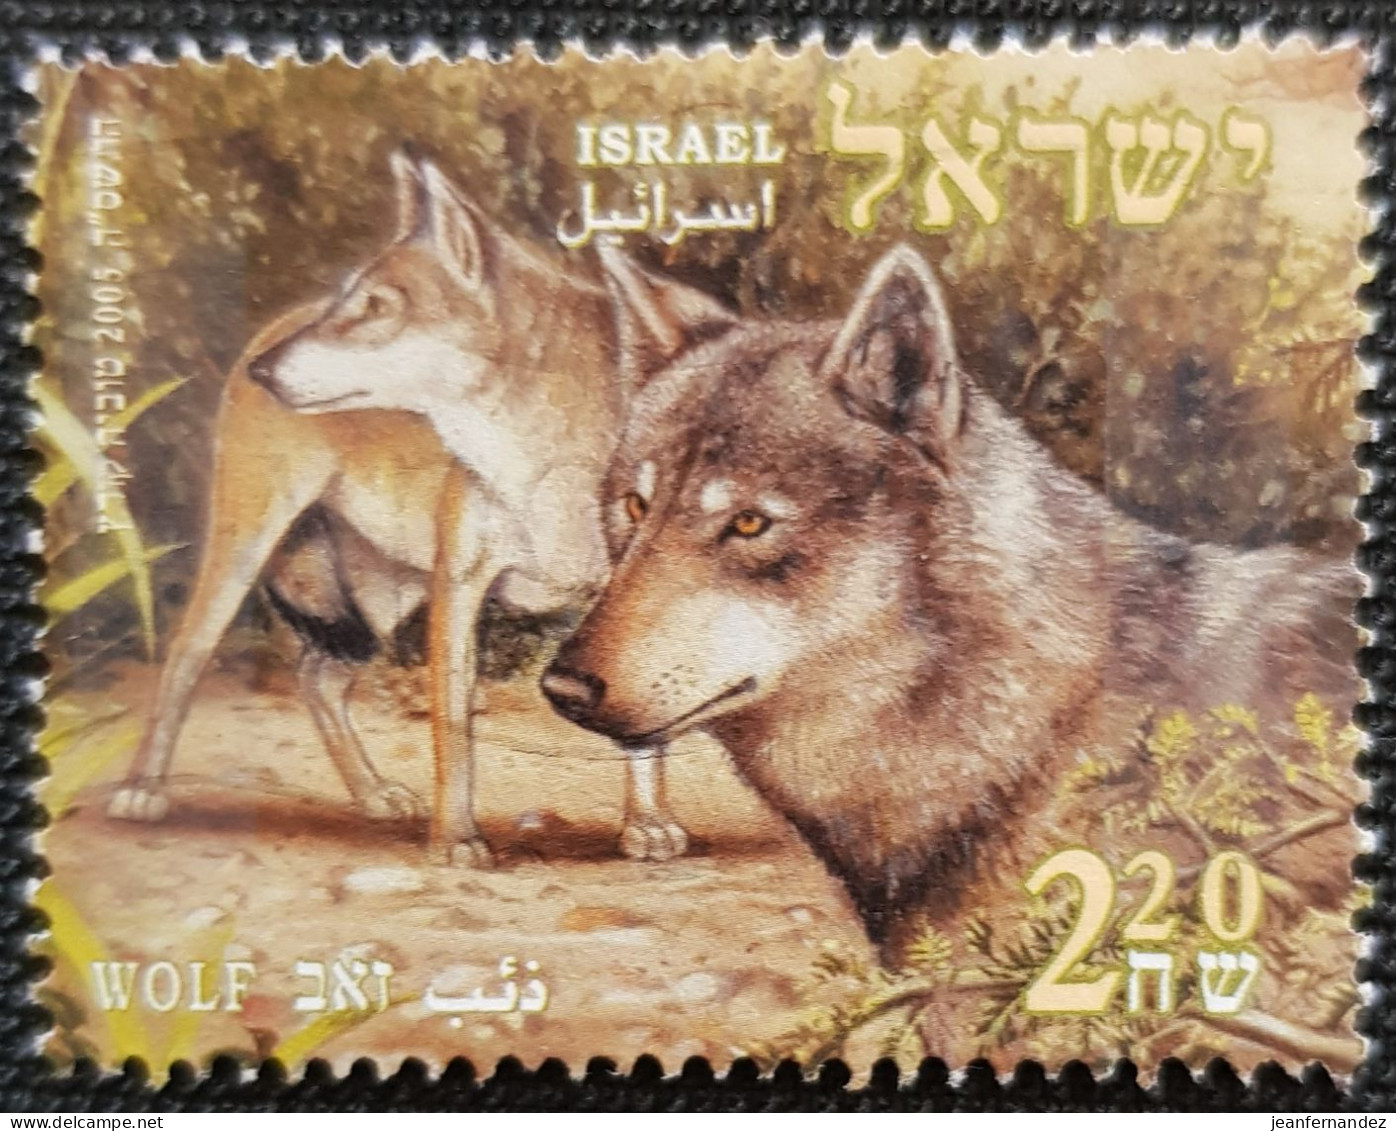 Israel 2005 Biblical Animal Stampworld N° 1805 - Gebraucht (ohne Tabs)